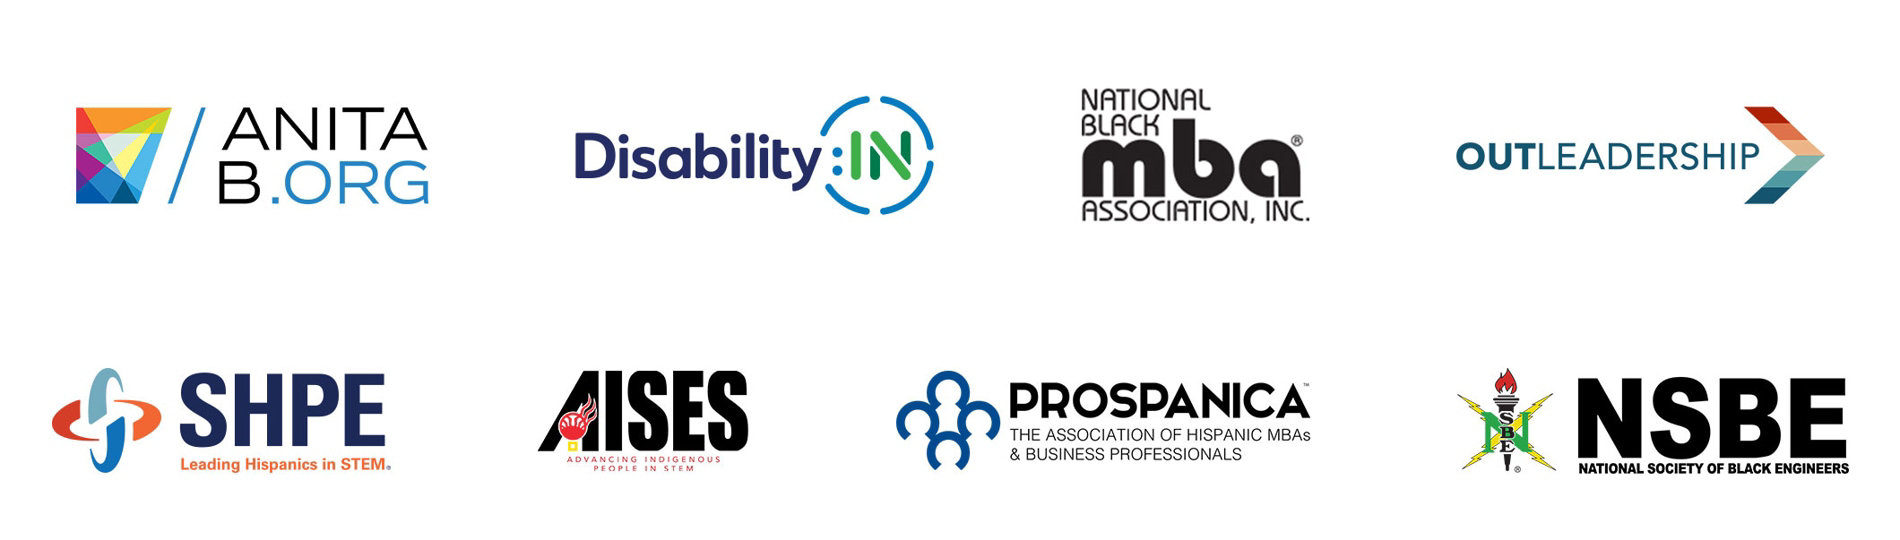 AnitaB.org logo, Disability:IN logo, National Black MBA Association logo, OutLeadership logo, SHPE logo, AISES logo, Prospanica logo, and NSBE logo